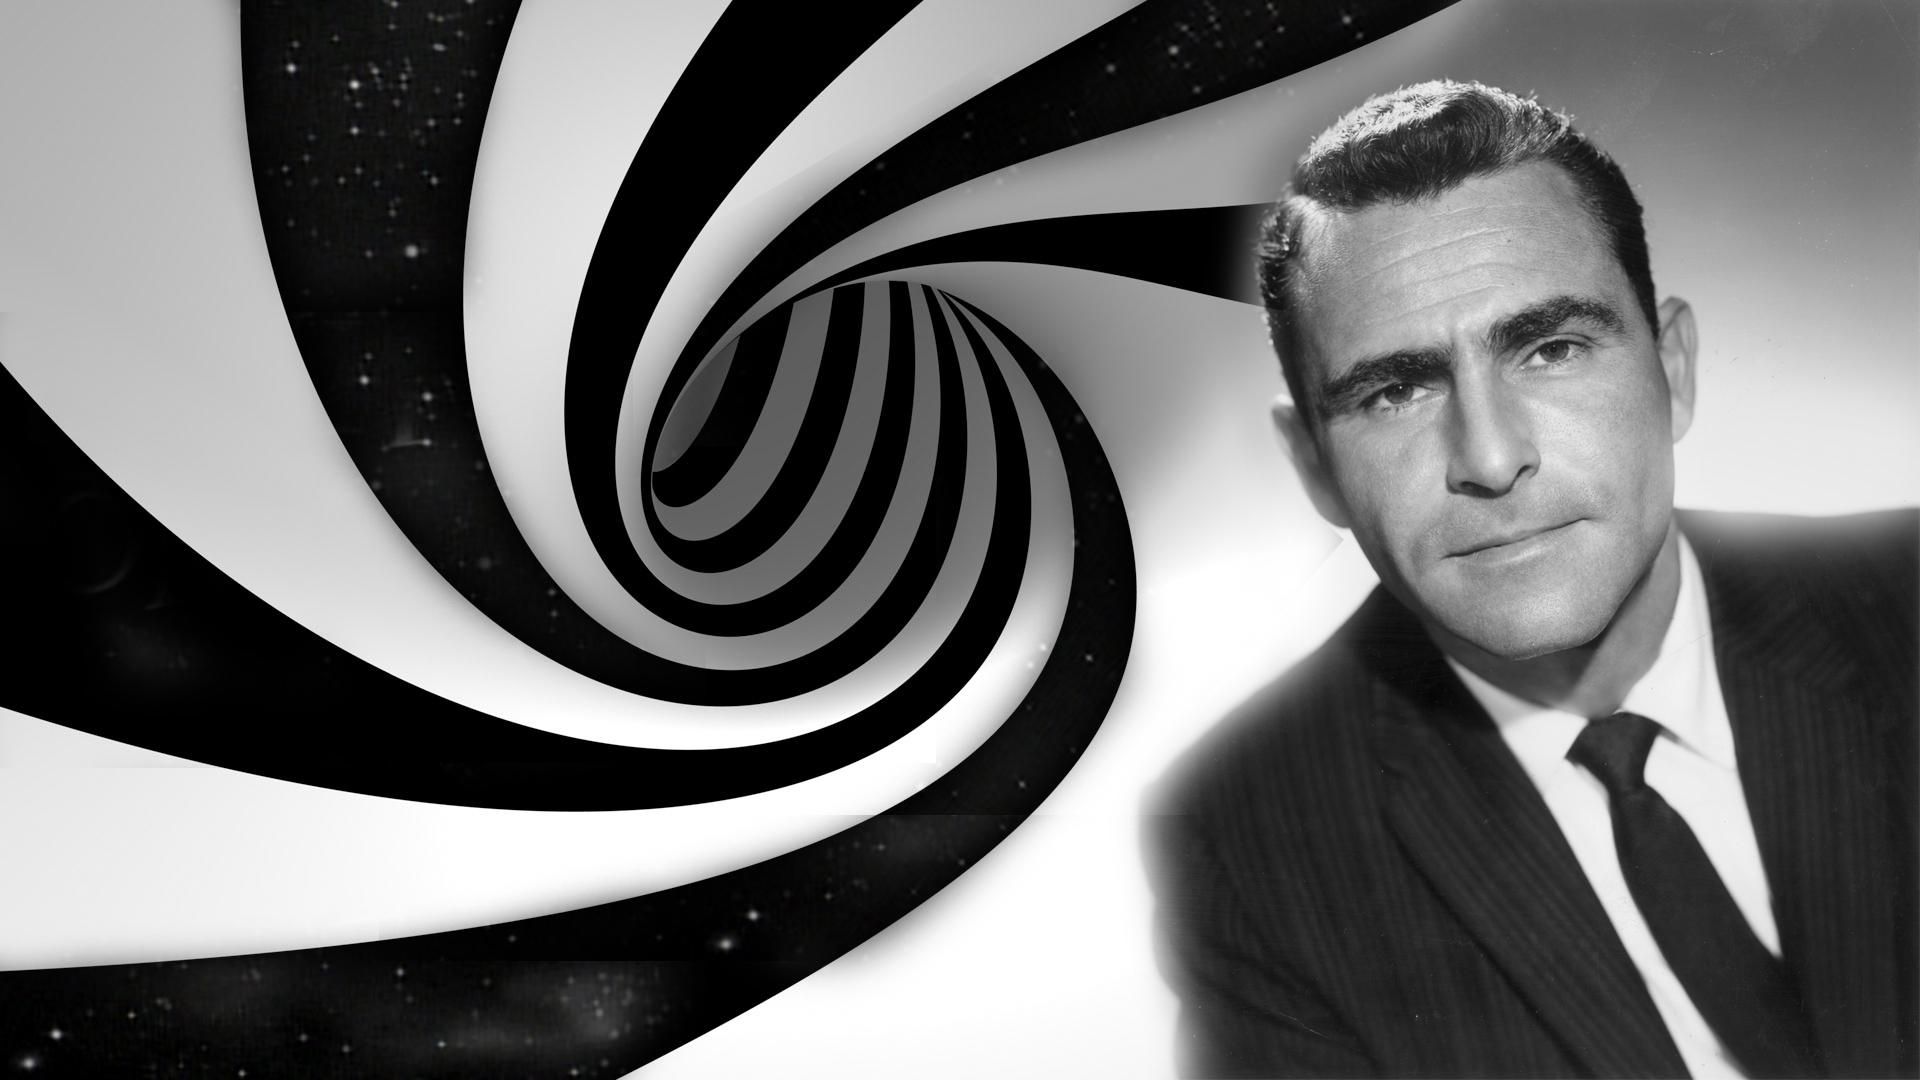 The Twilight Zone background